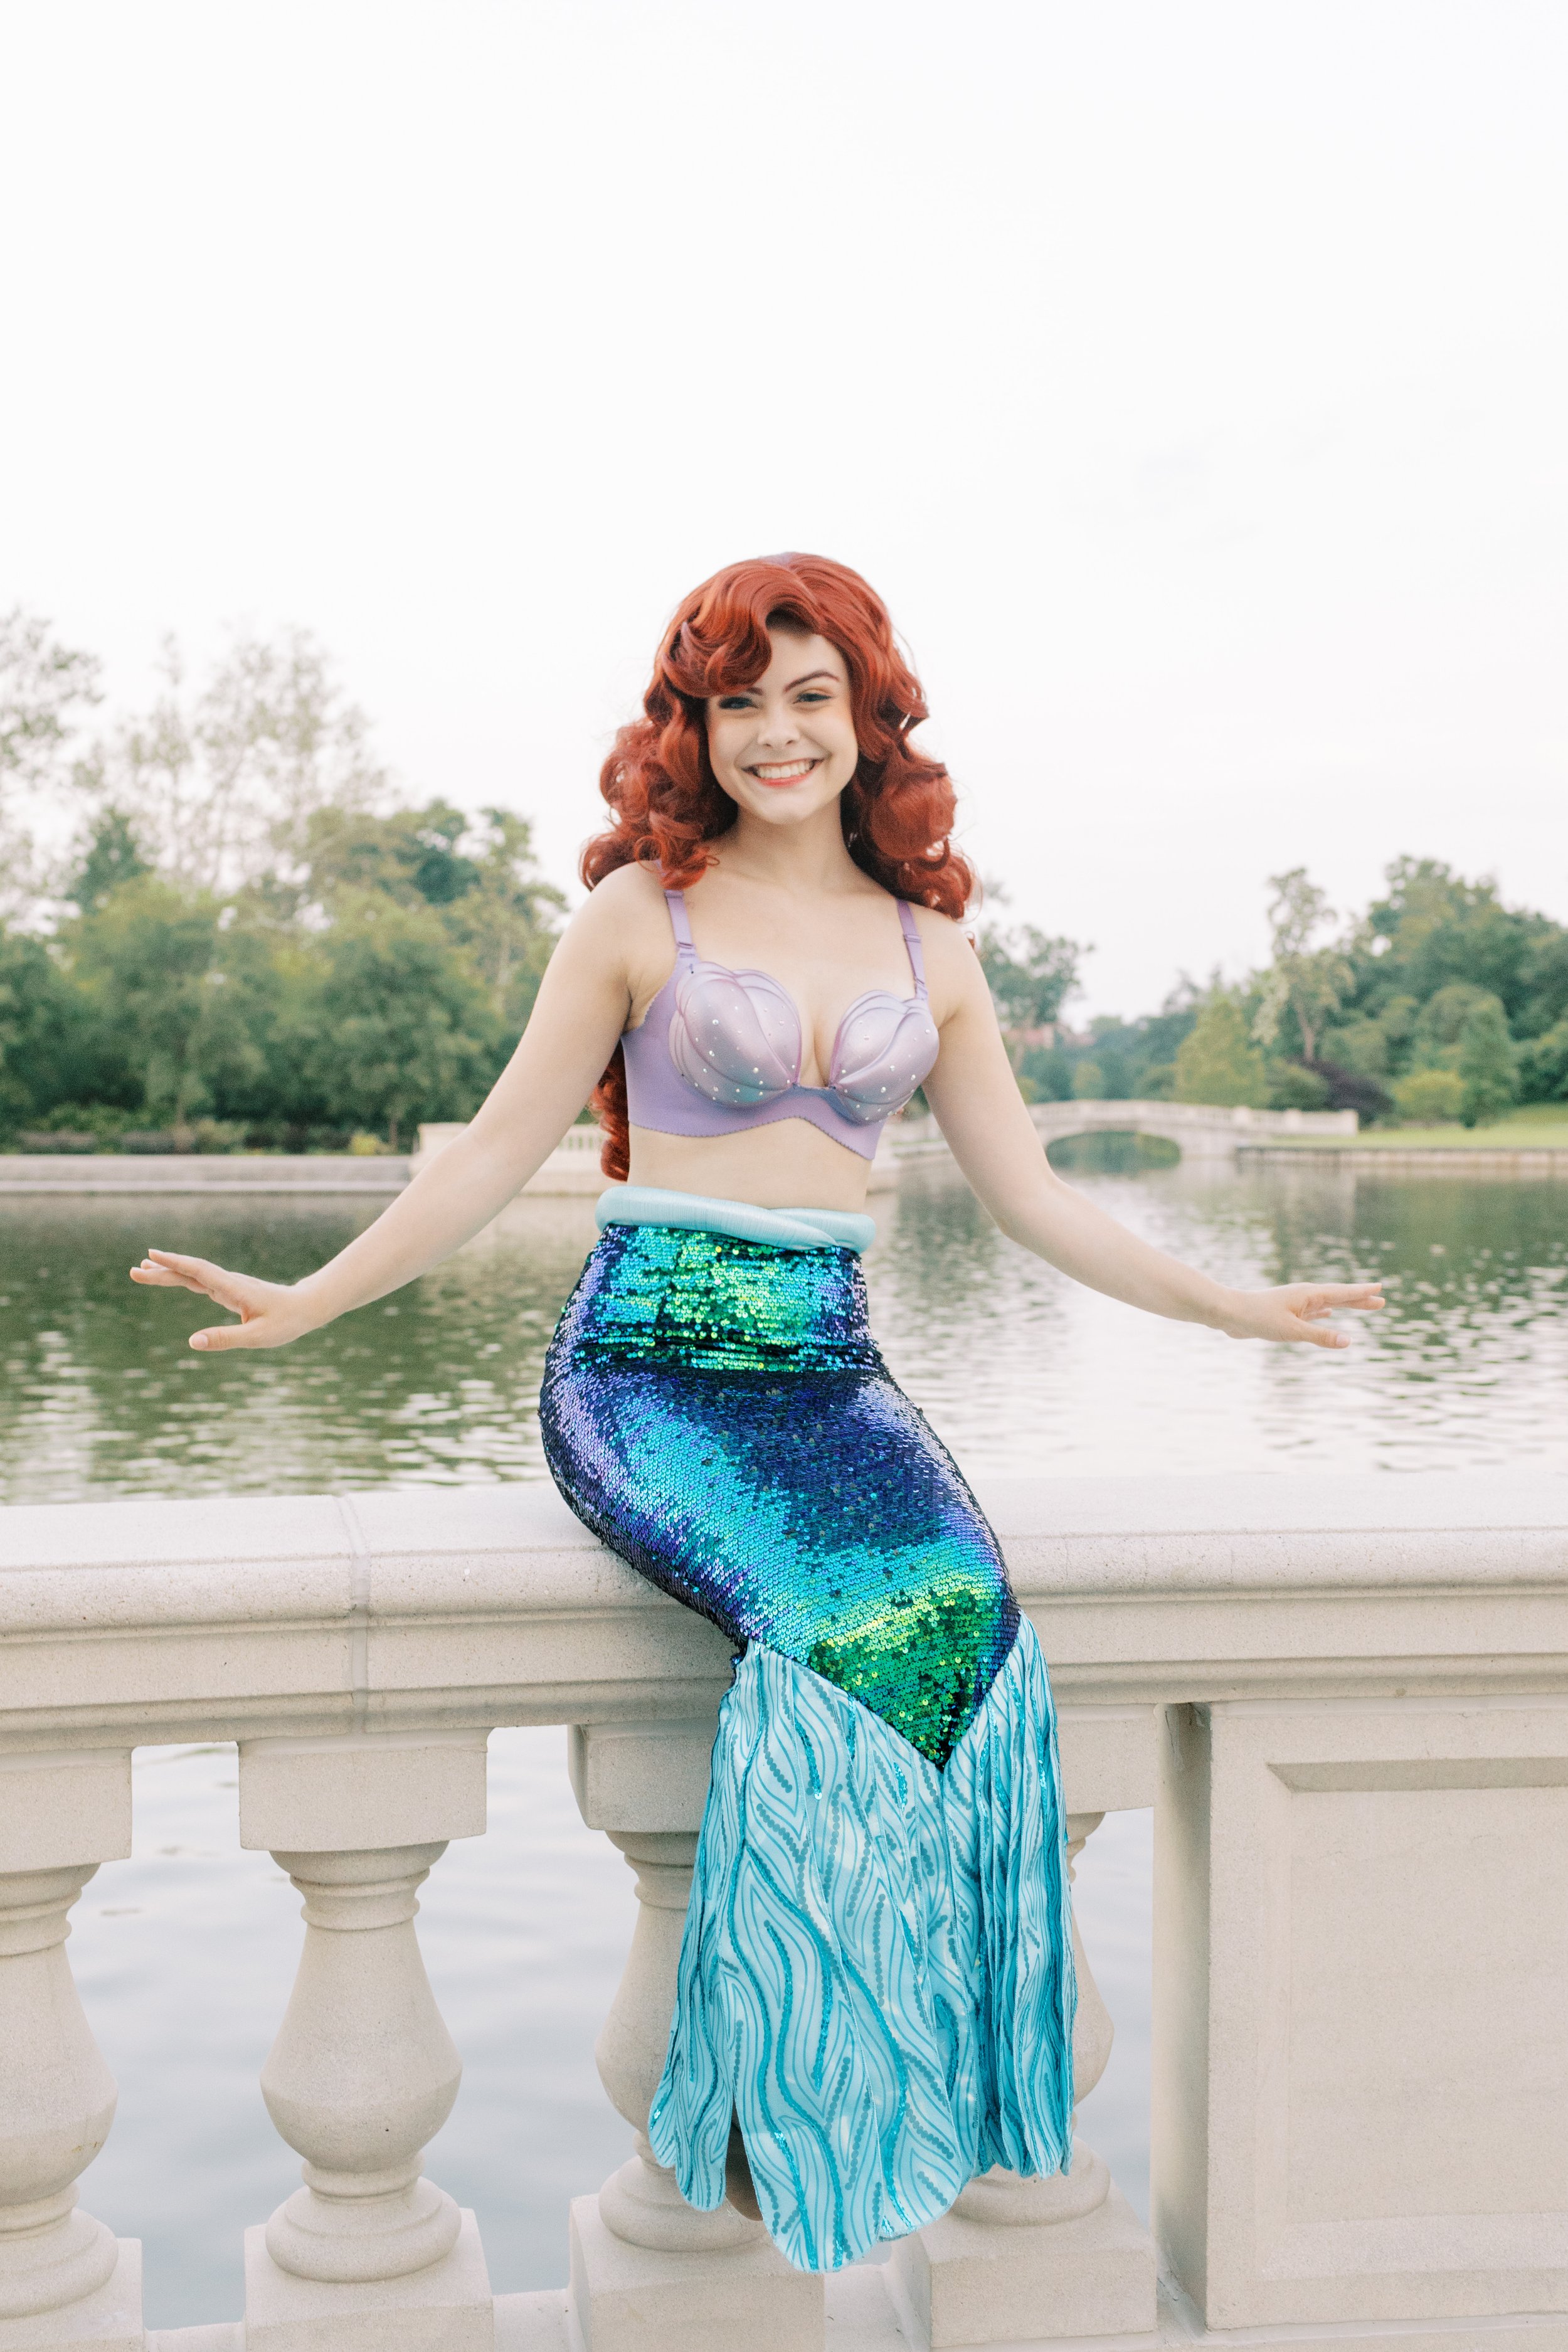 Mermaid Princess: Classic Shells and Fin